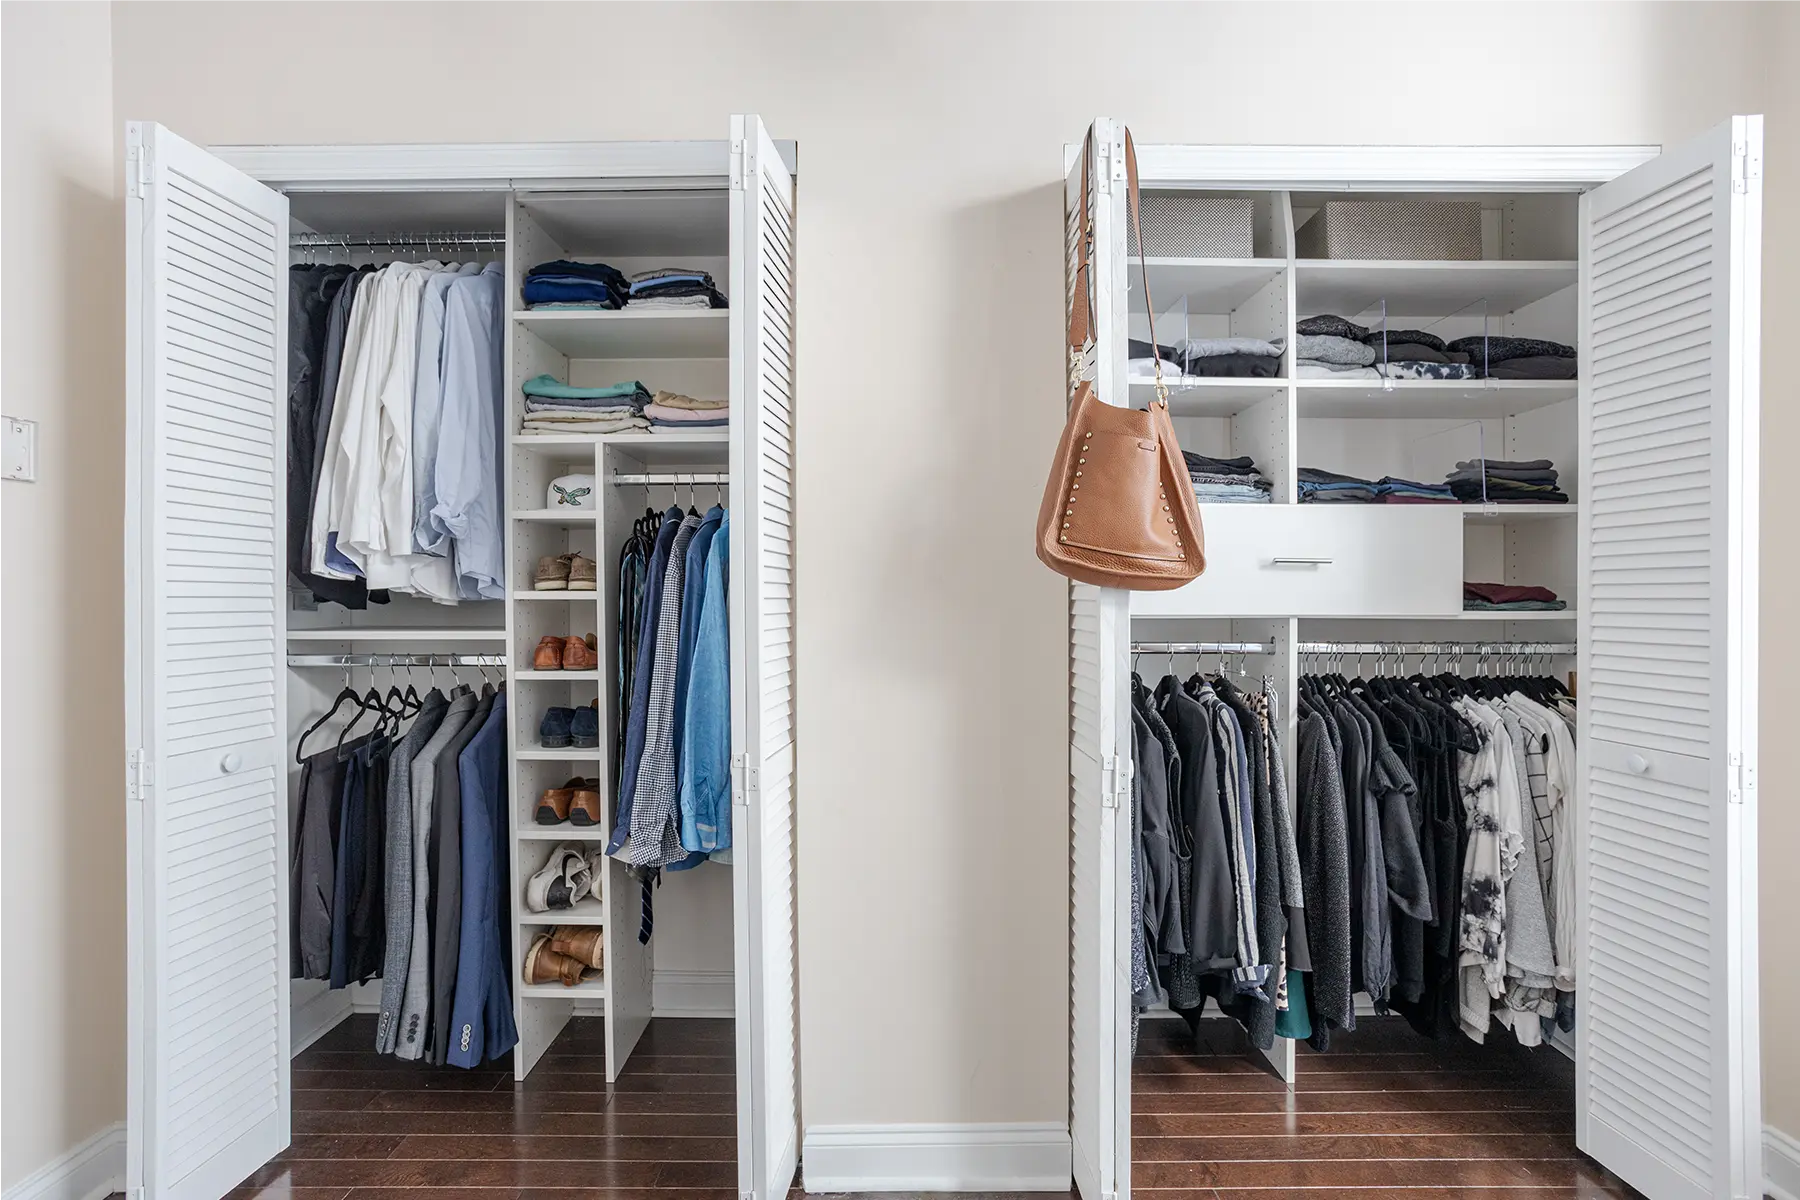 What Makes A Good Closet Design?